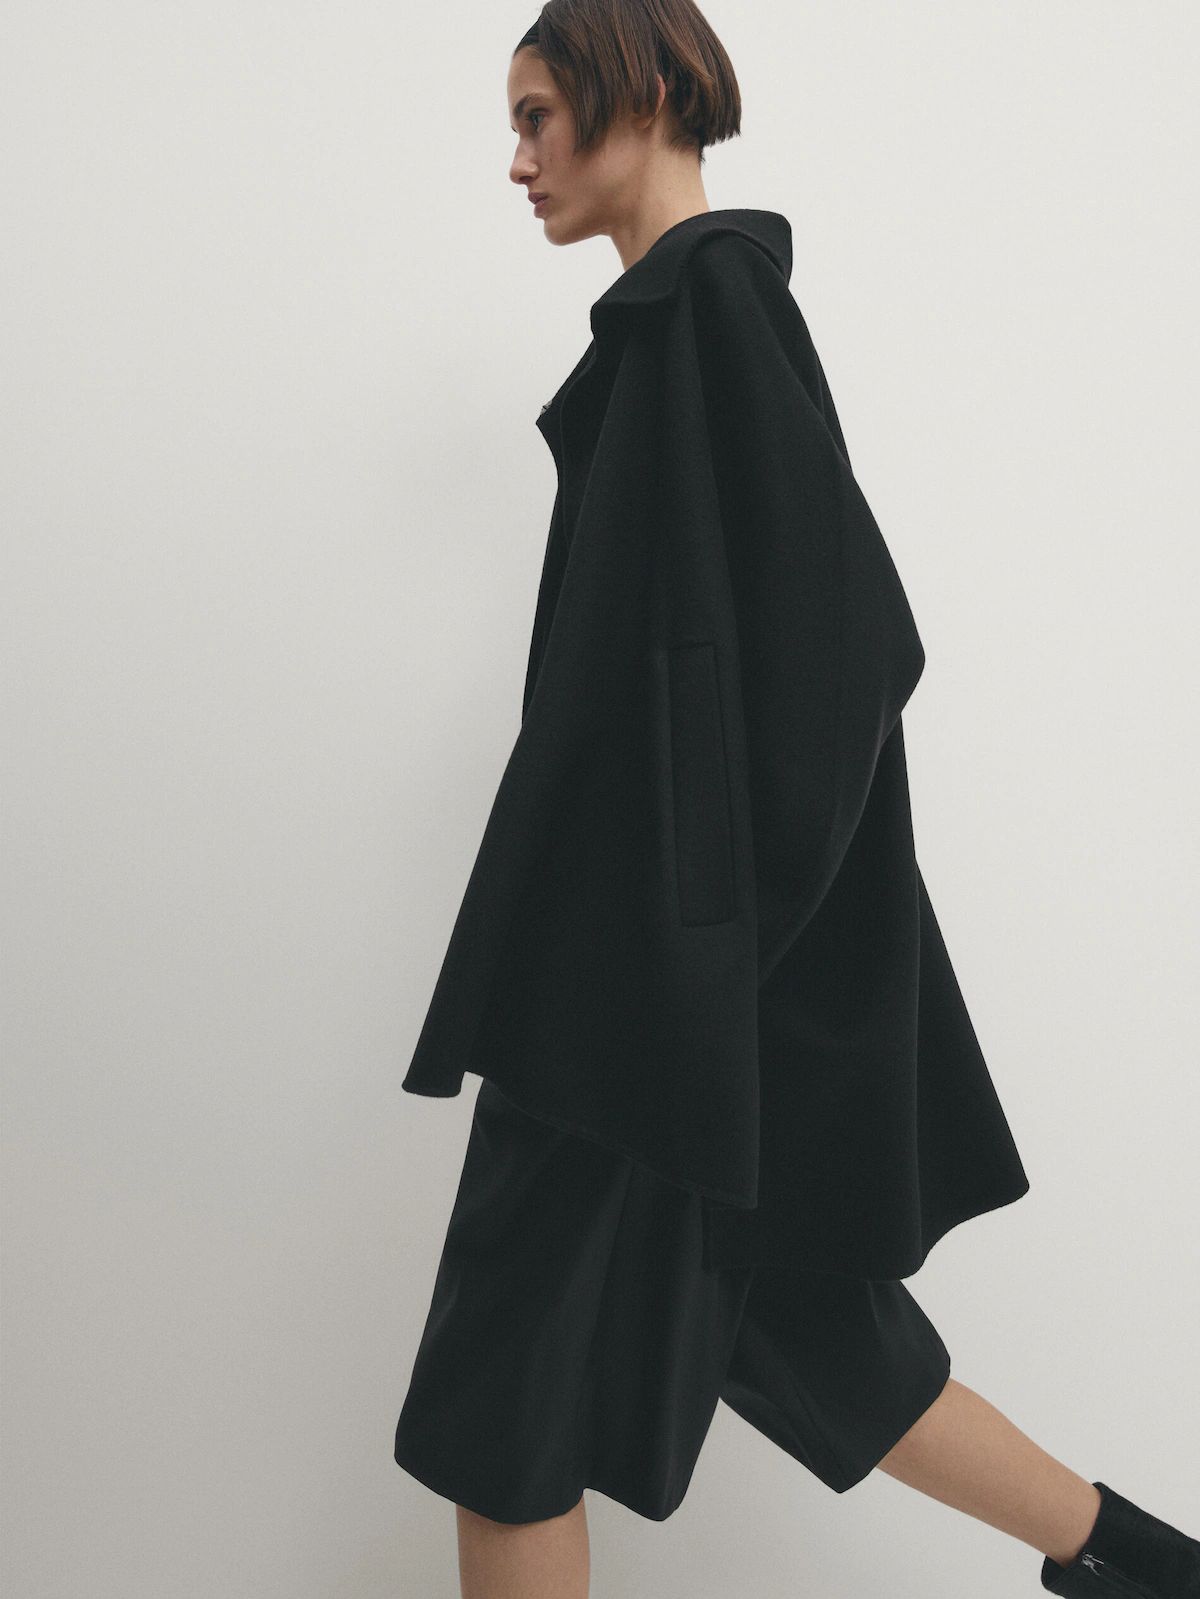 Black wool blend cape coat | Massimo Dutti (US)